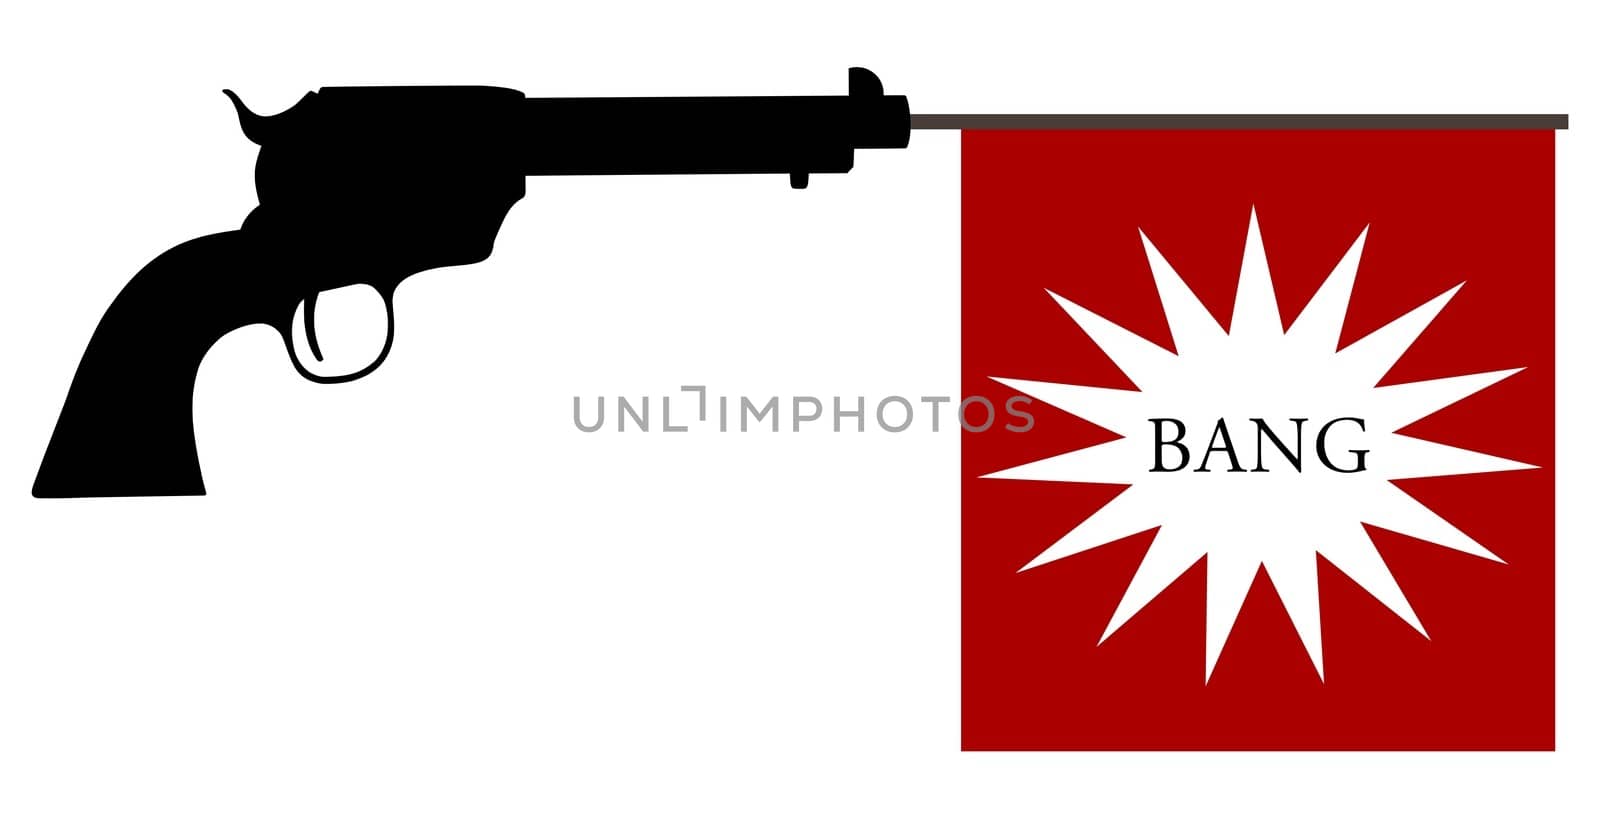 Illustration of a joke gun with bang sign